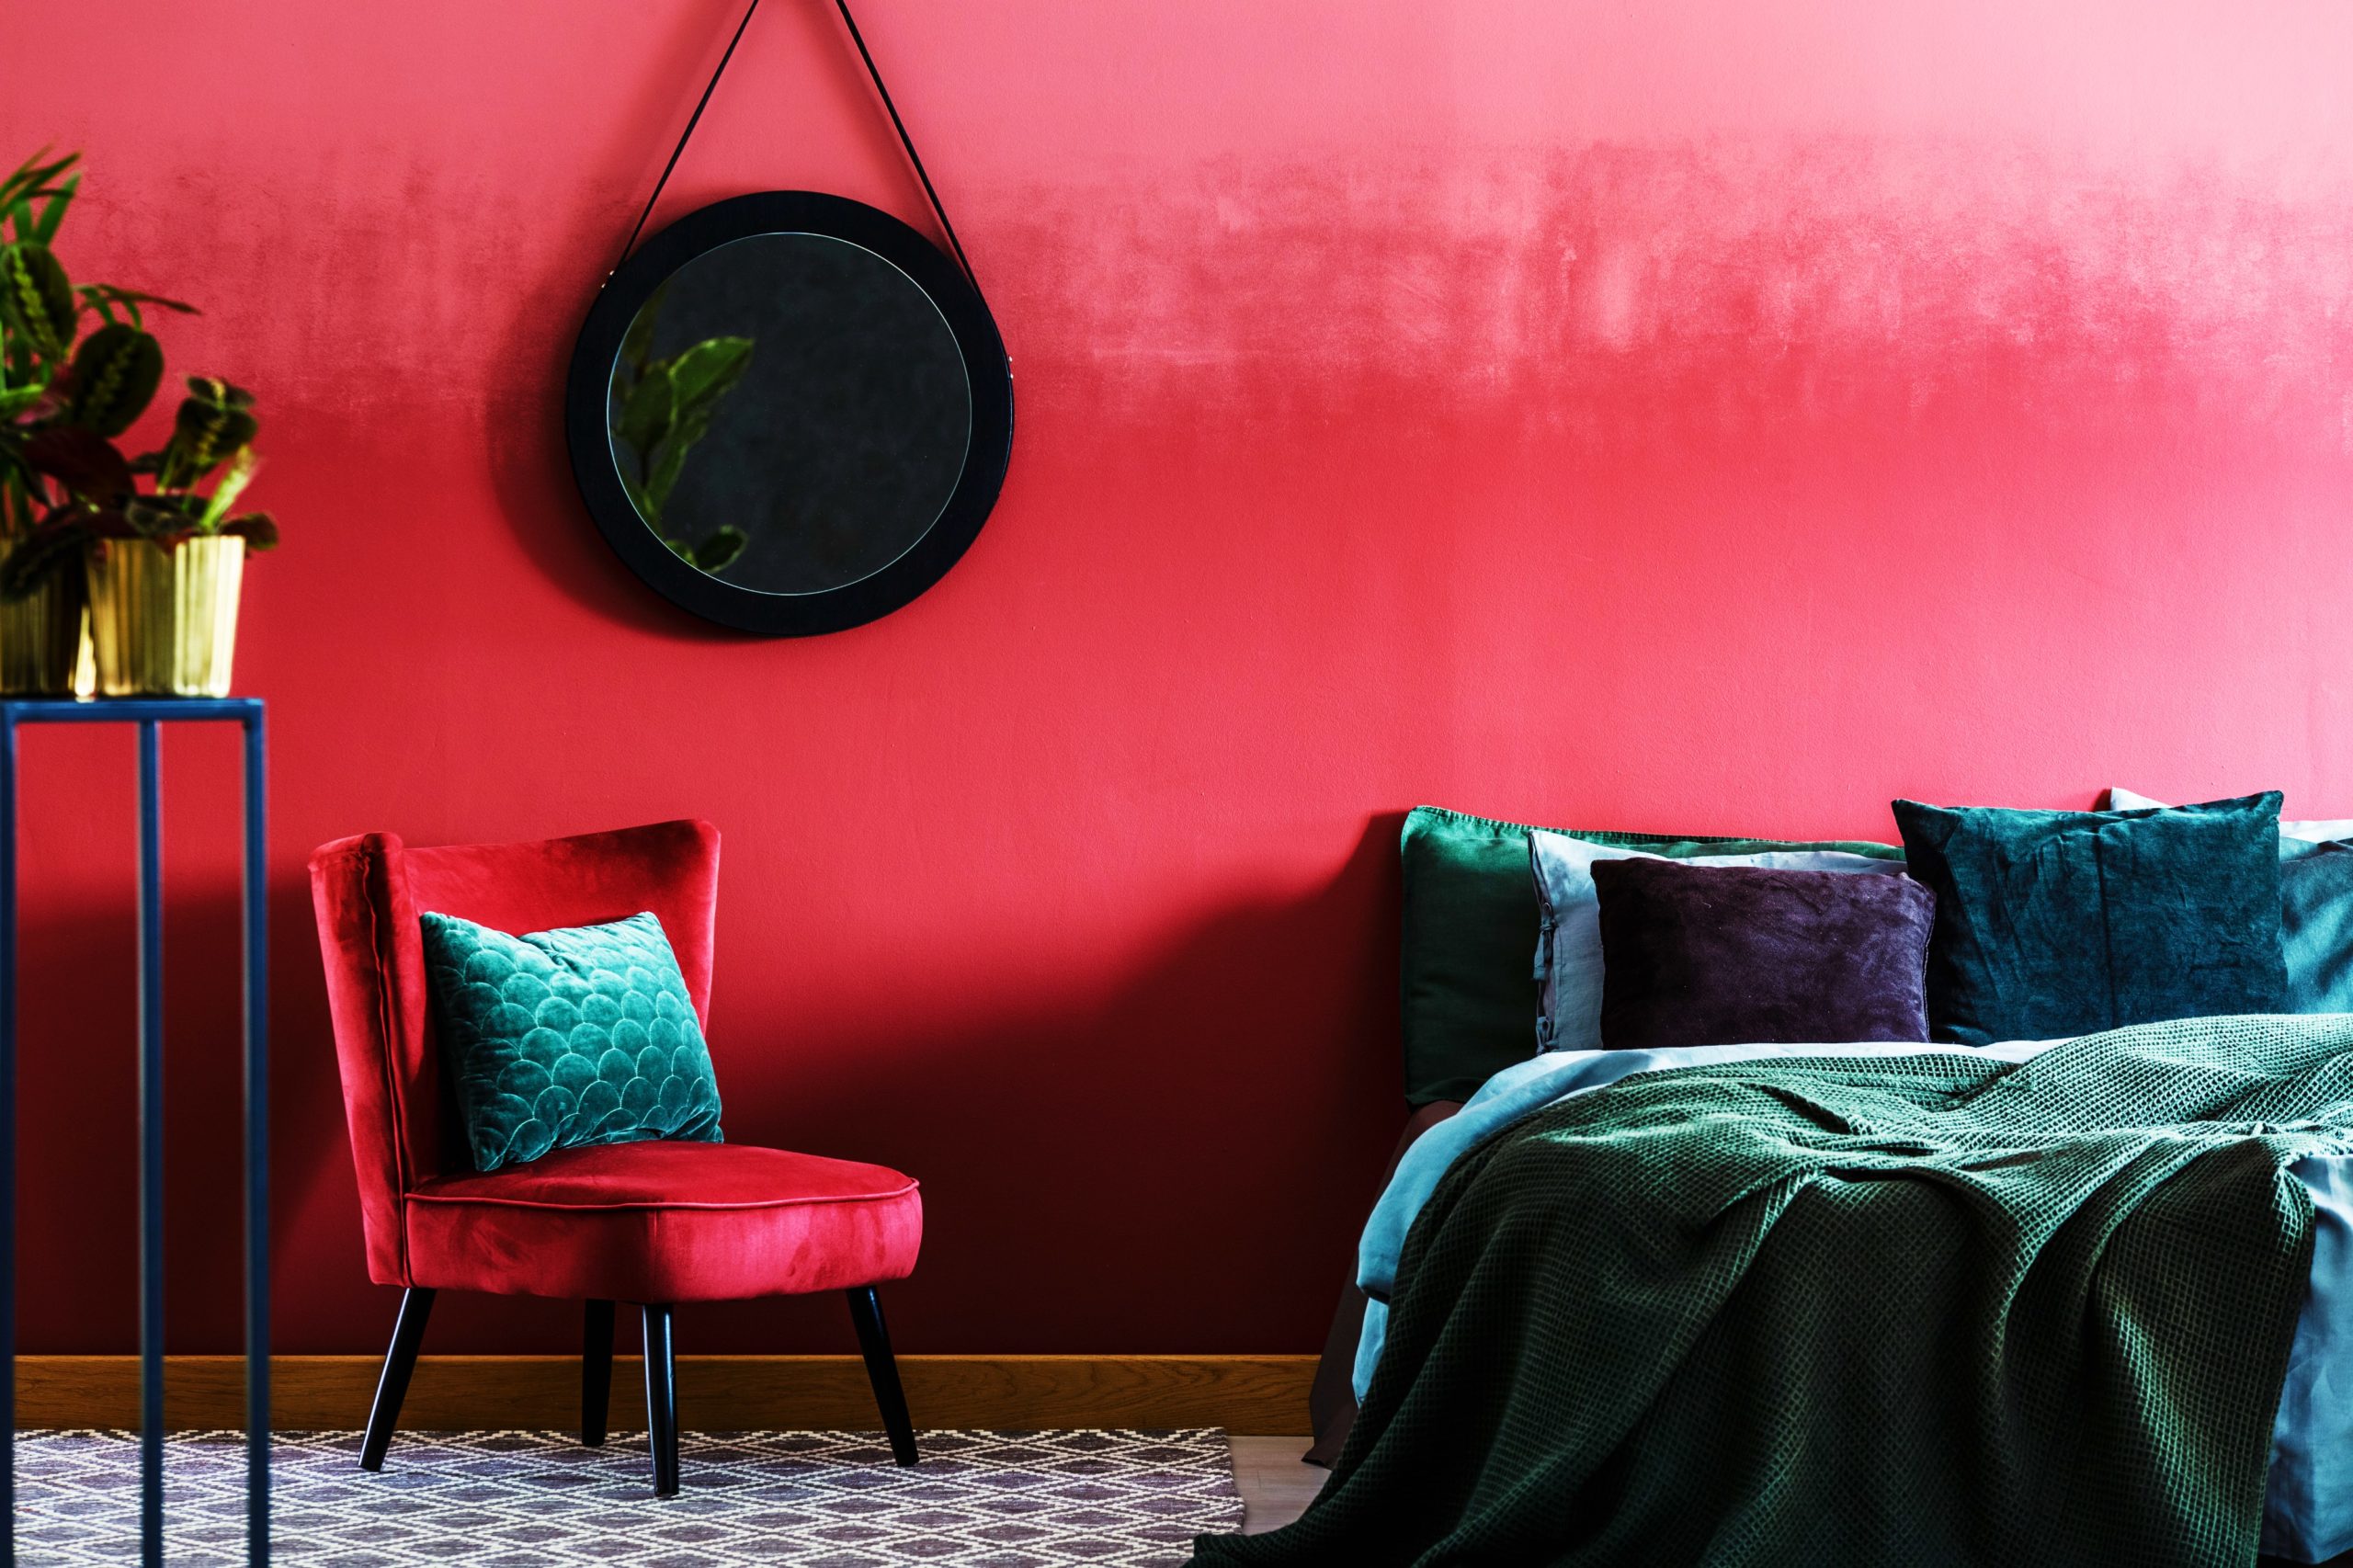 <img src="burgundy.jpg" alt="burgundy bedroom with blankets"/> 